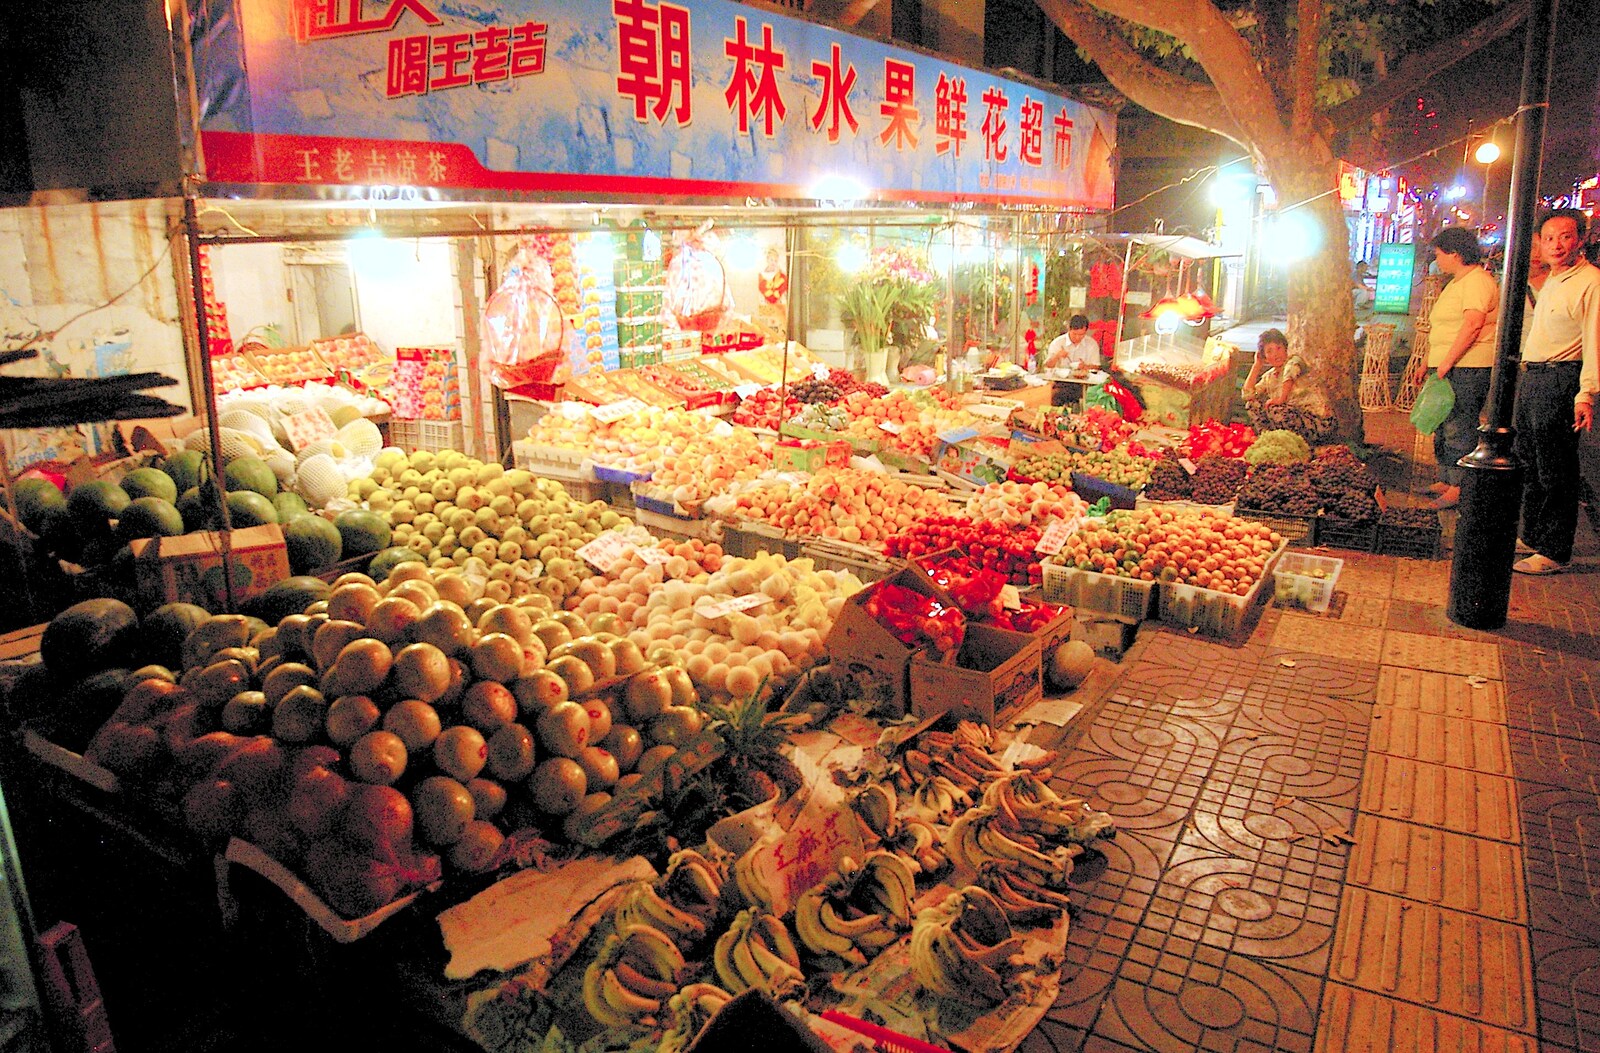 A massive pile of pavement fruit from Nanjing by Night, Nanjing, Jiangsu Province, China - 4th October 2006